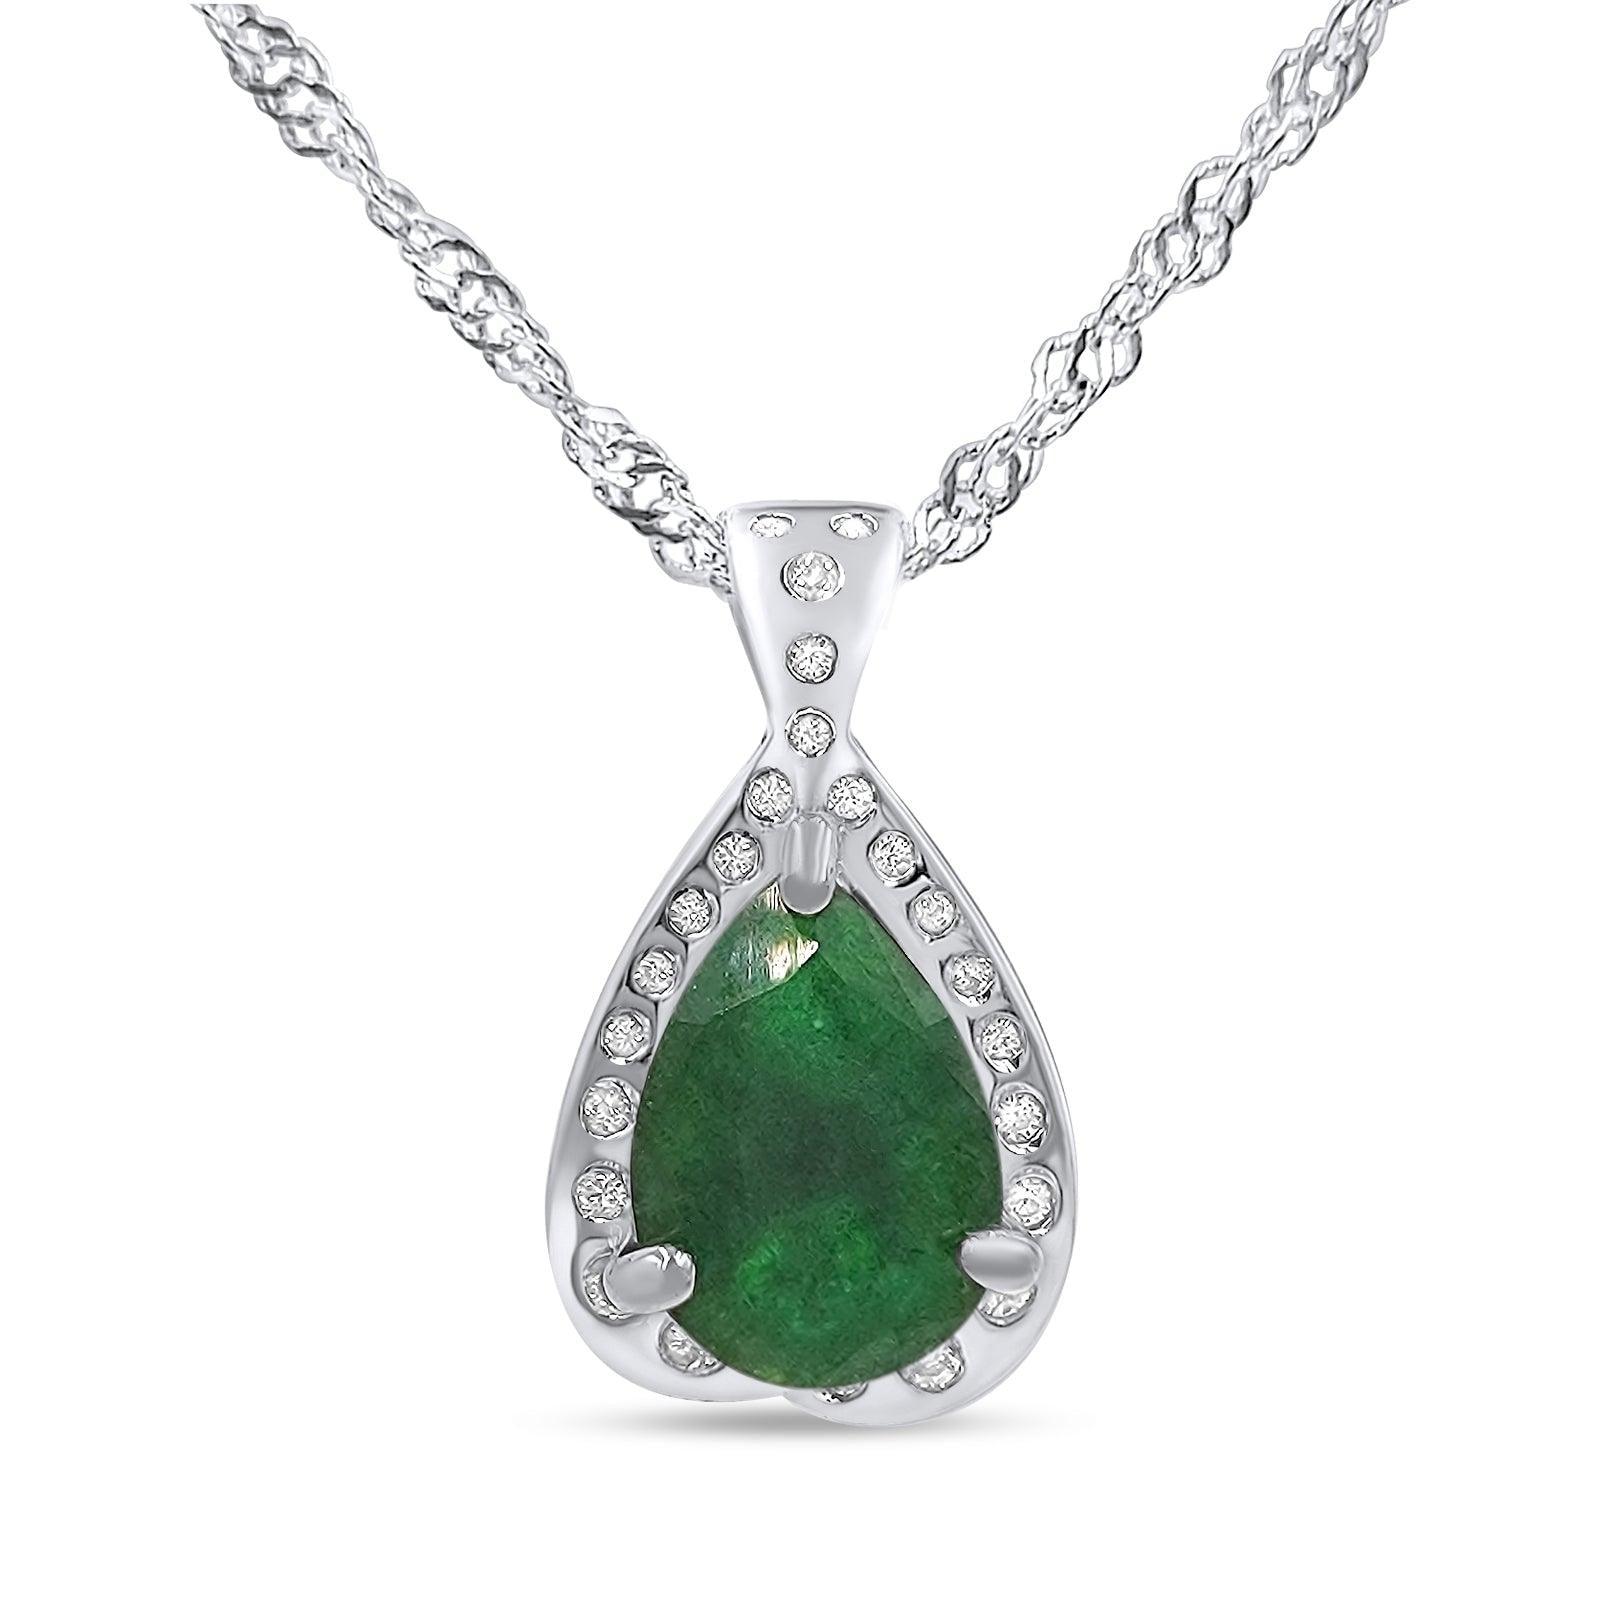 Genuine Emerald Necklace - Uniquelan Jewelry